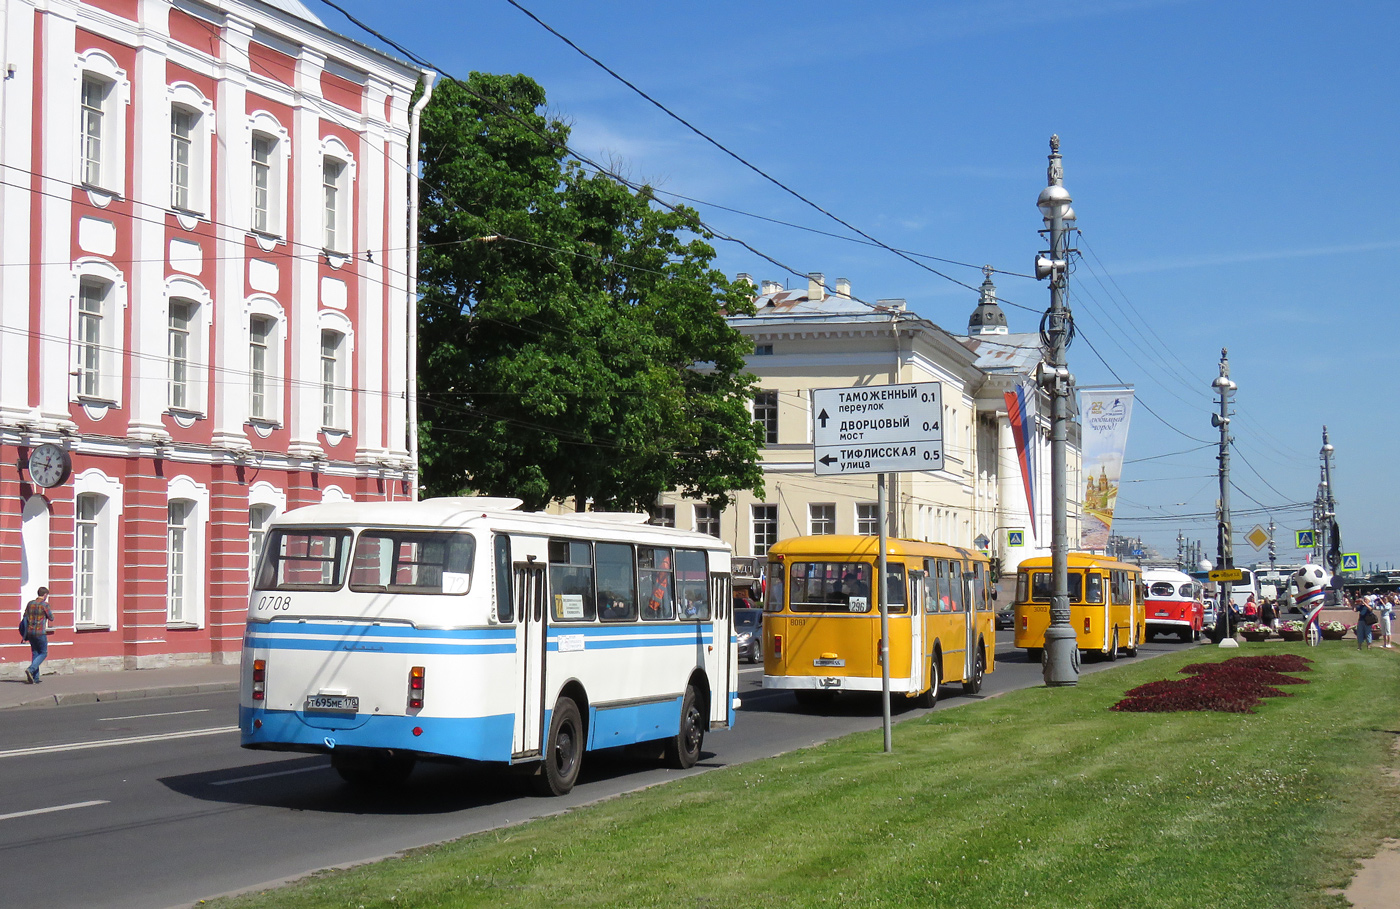 Sankt Peterburgas, LAZ-695N Nr. 0708; Sankt Peterburgas — IV St.Petersburg Retro Transport Parade, May 26, 2018